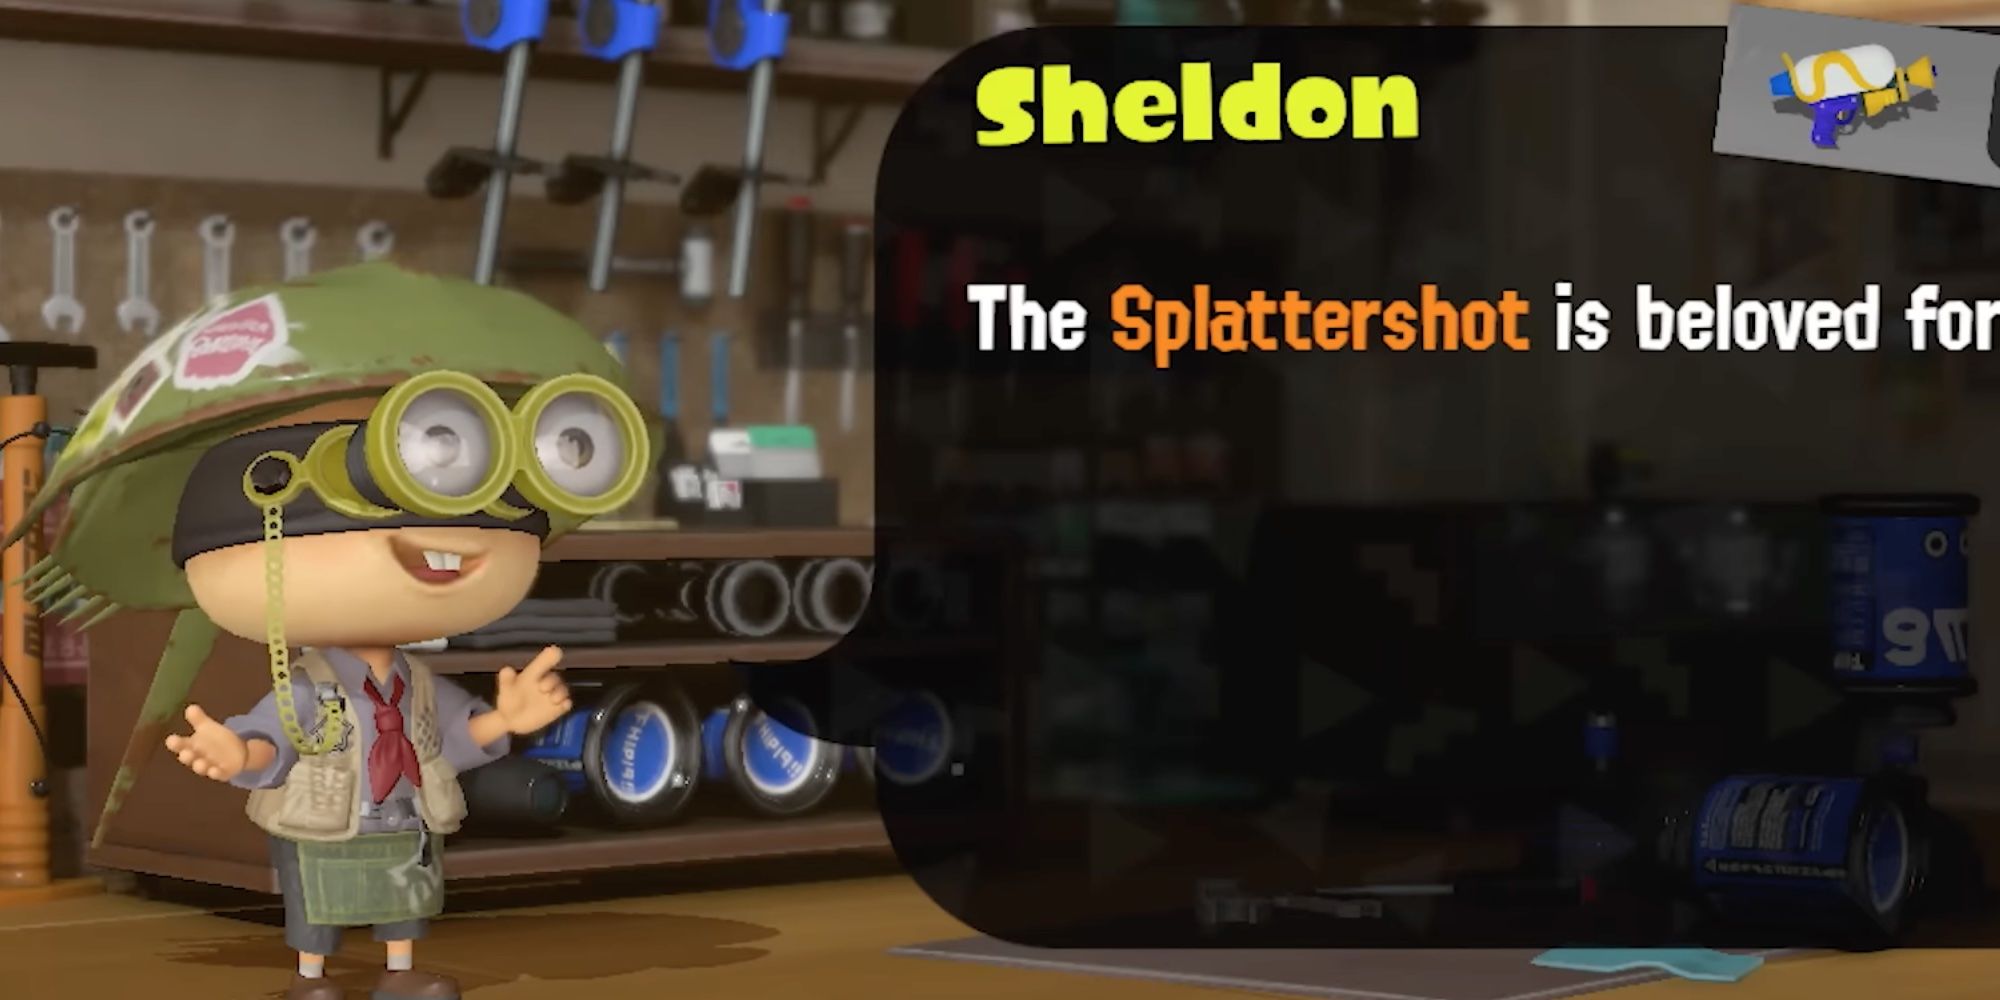 Sheldon from Splatoon 3